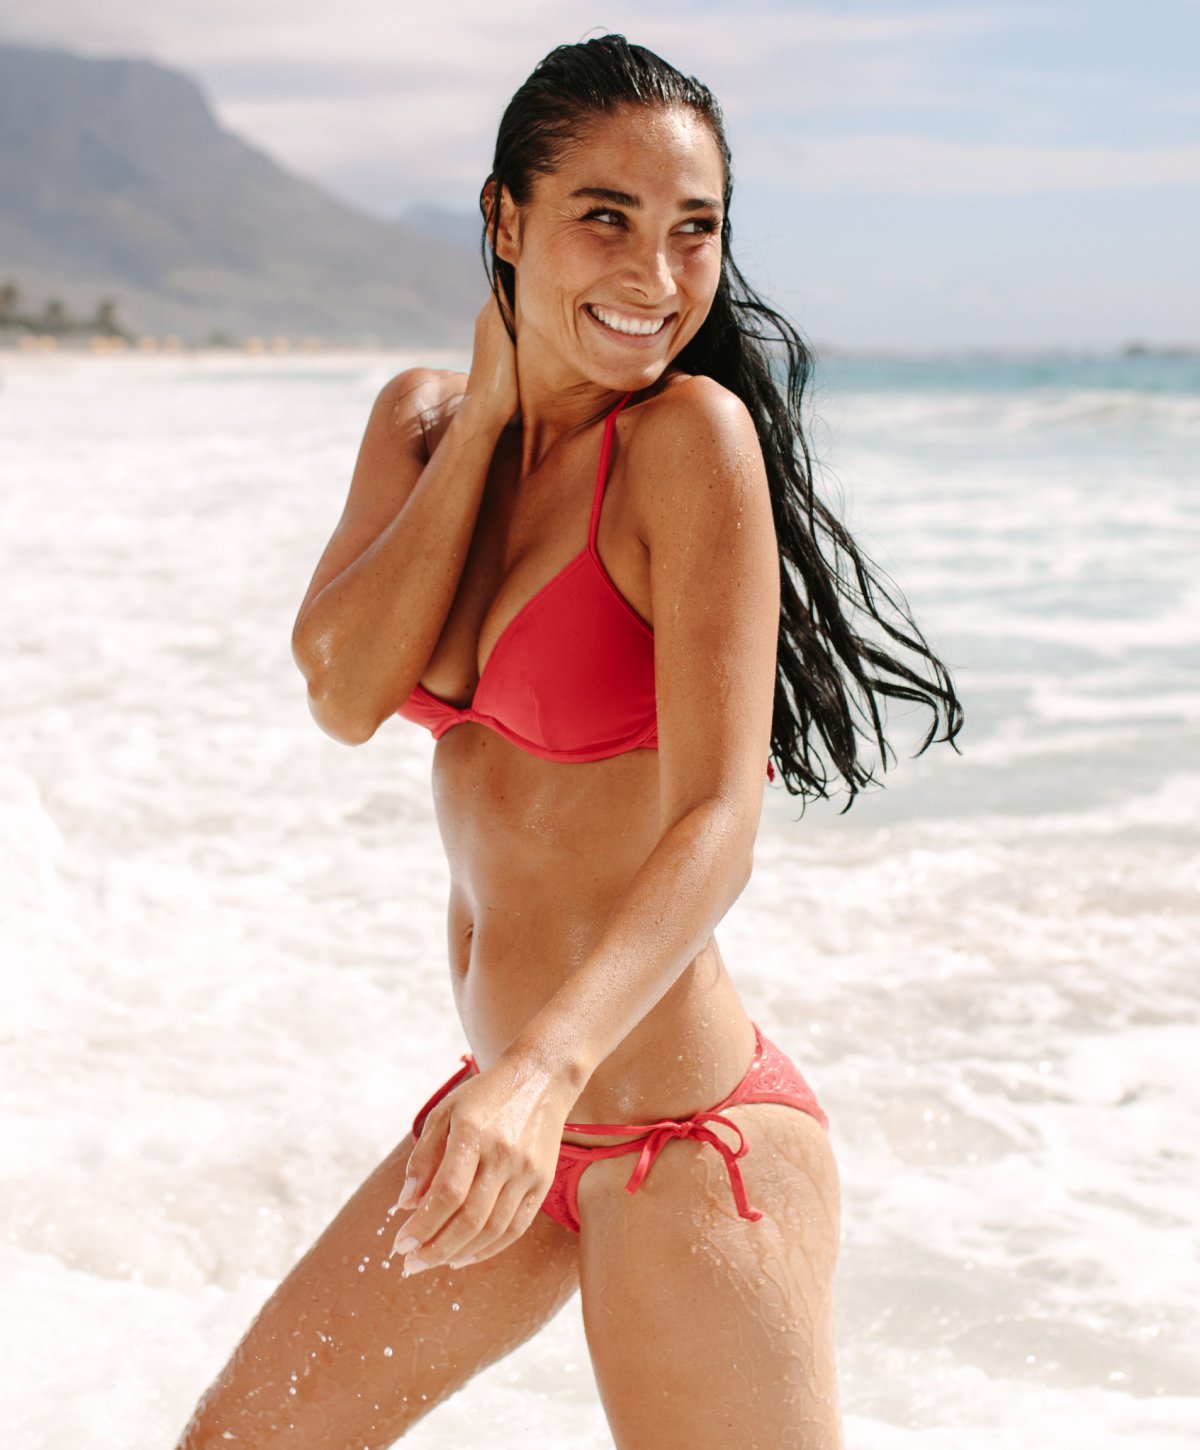 Temecula Plastic Surgery model smiling on beach